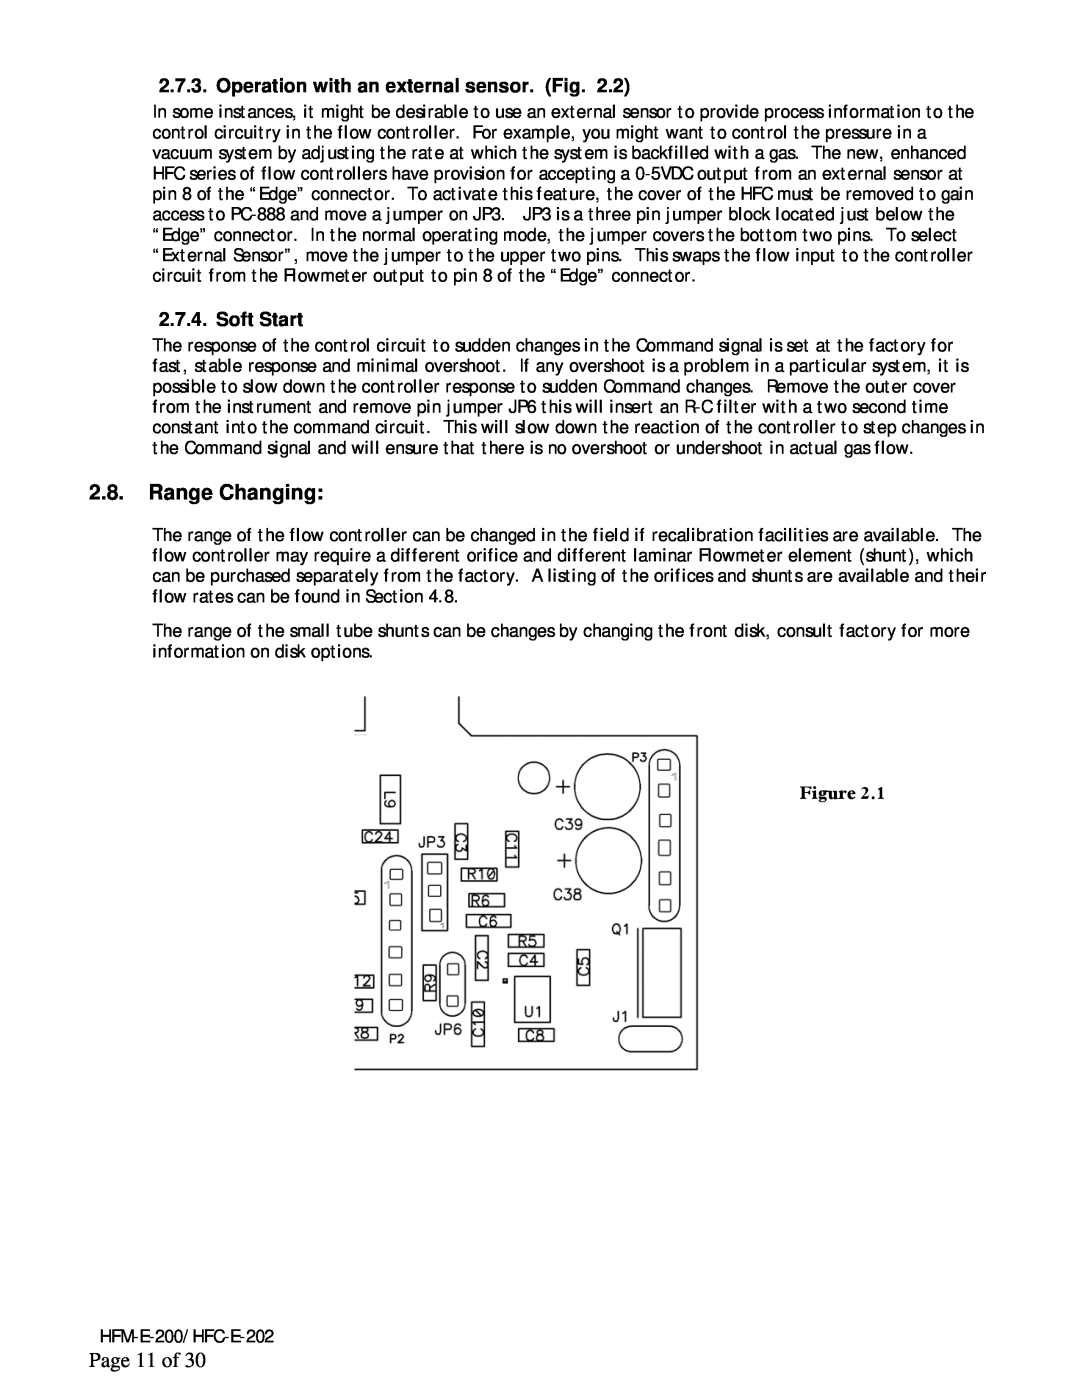 Teledyne HFM-E-200, HFC-E-202 Range Changing, Page 11 of, Operation with an external sensor. Fig, Soft Start 